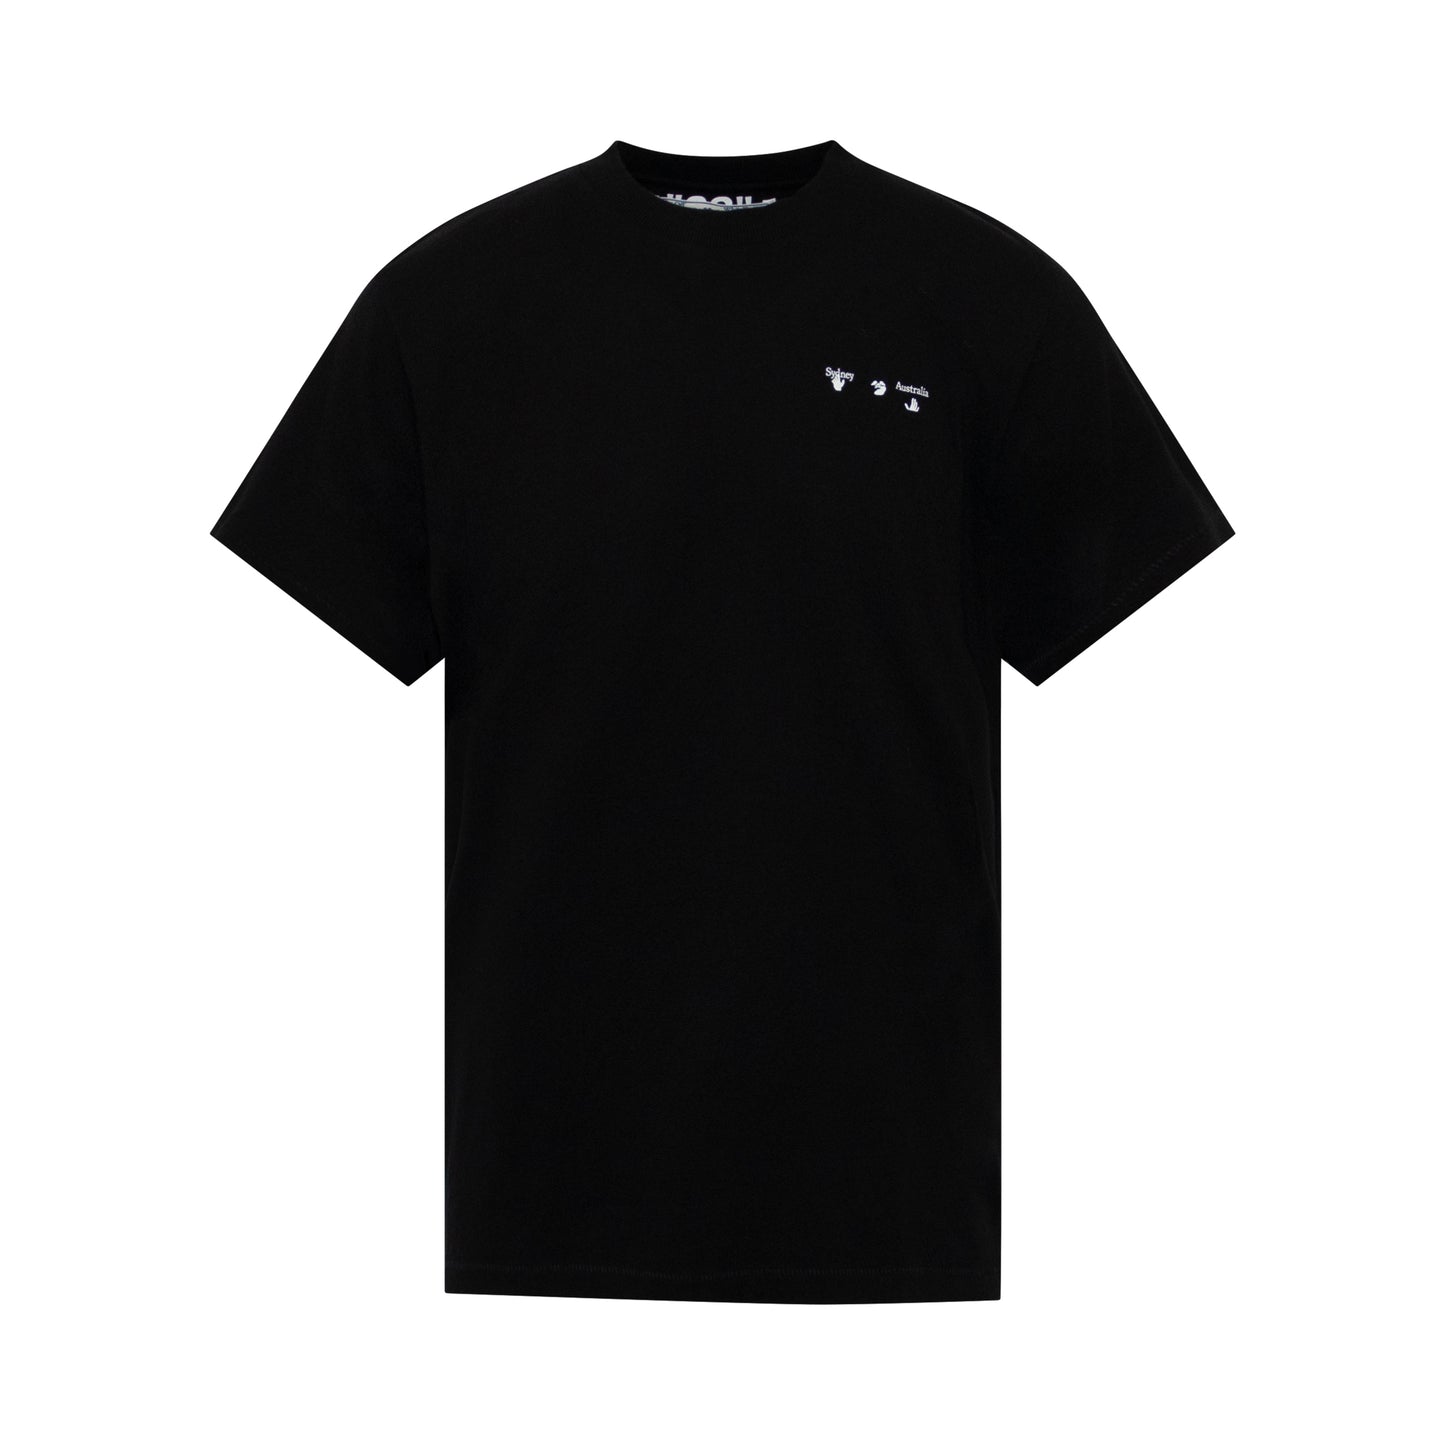 Off-White Sydney T-Shirt in Black